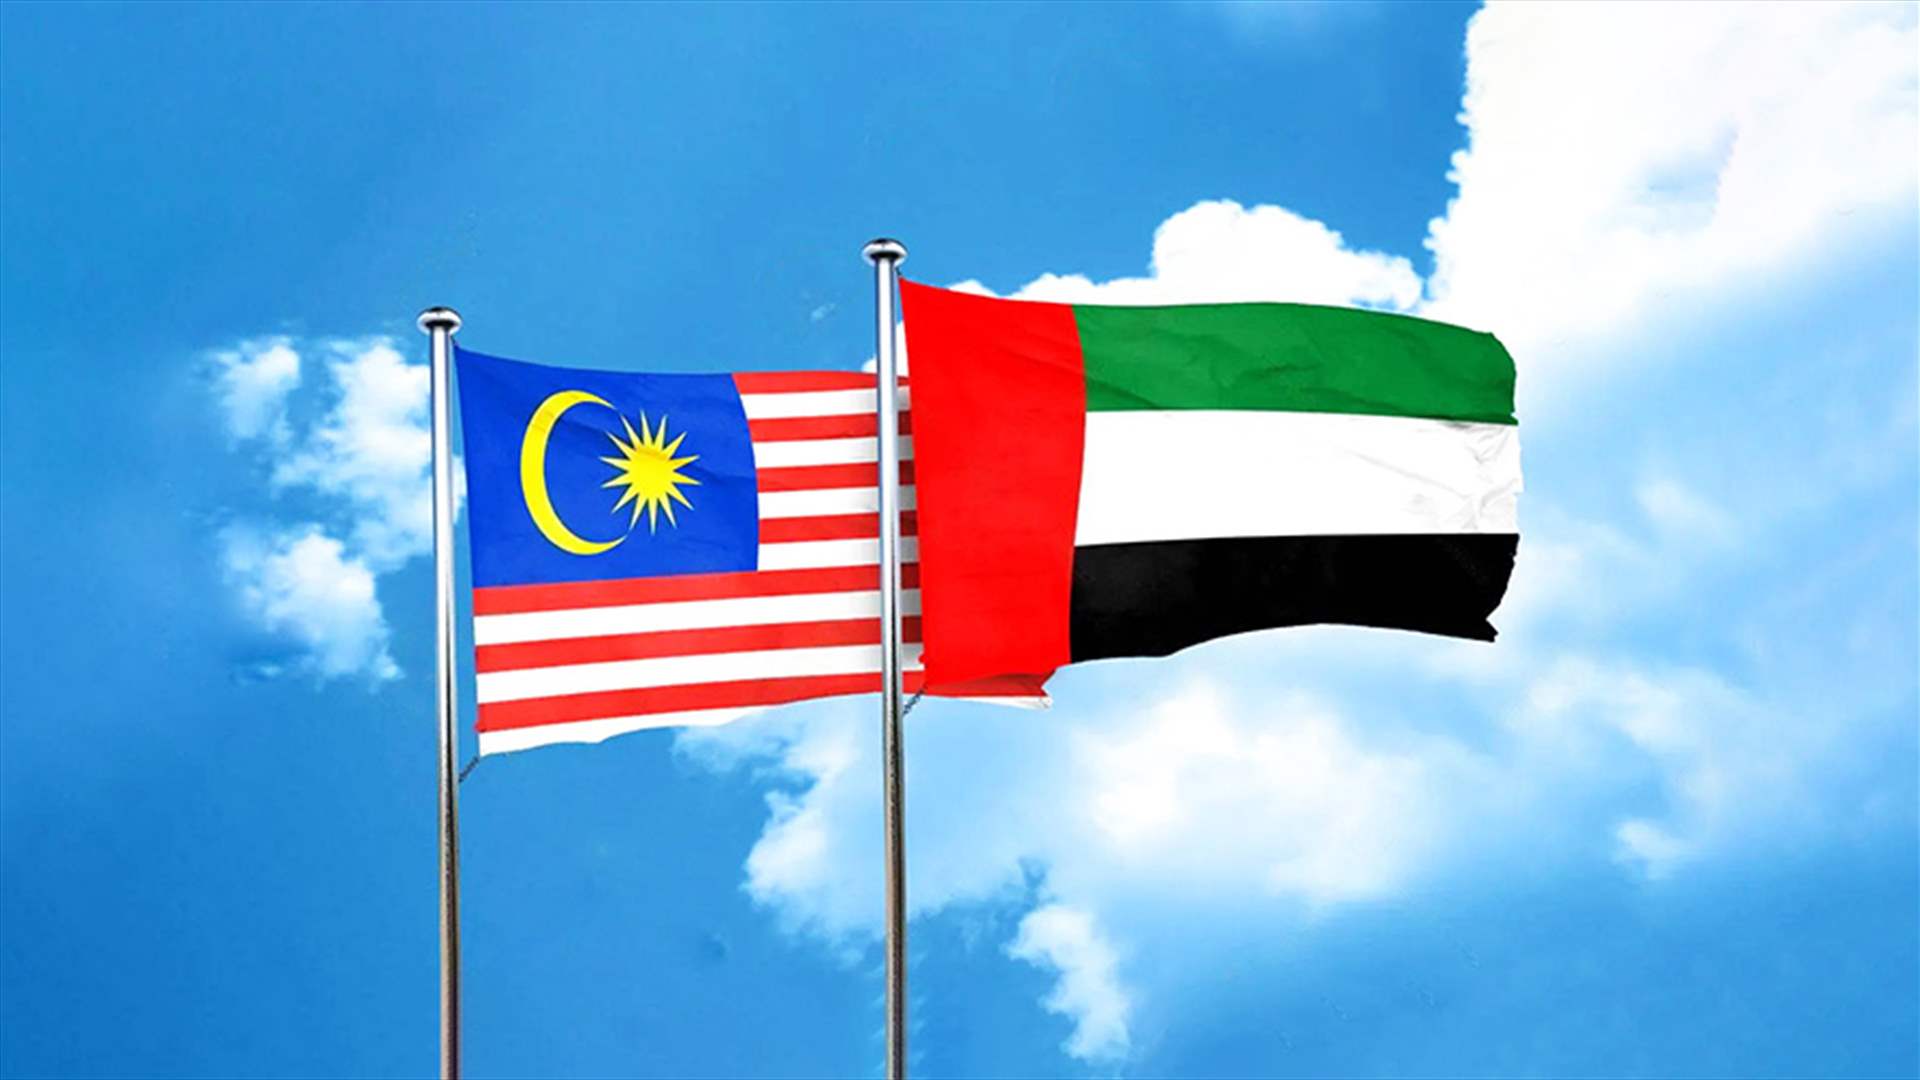 Malaysia, UAE to start talks on economic partnership